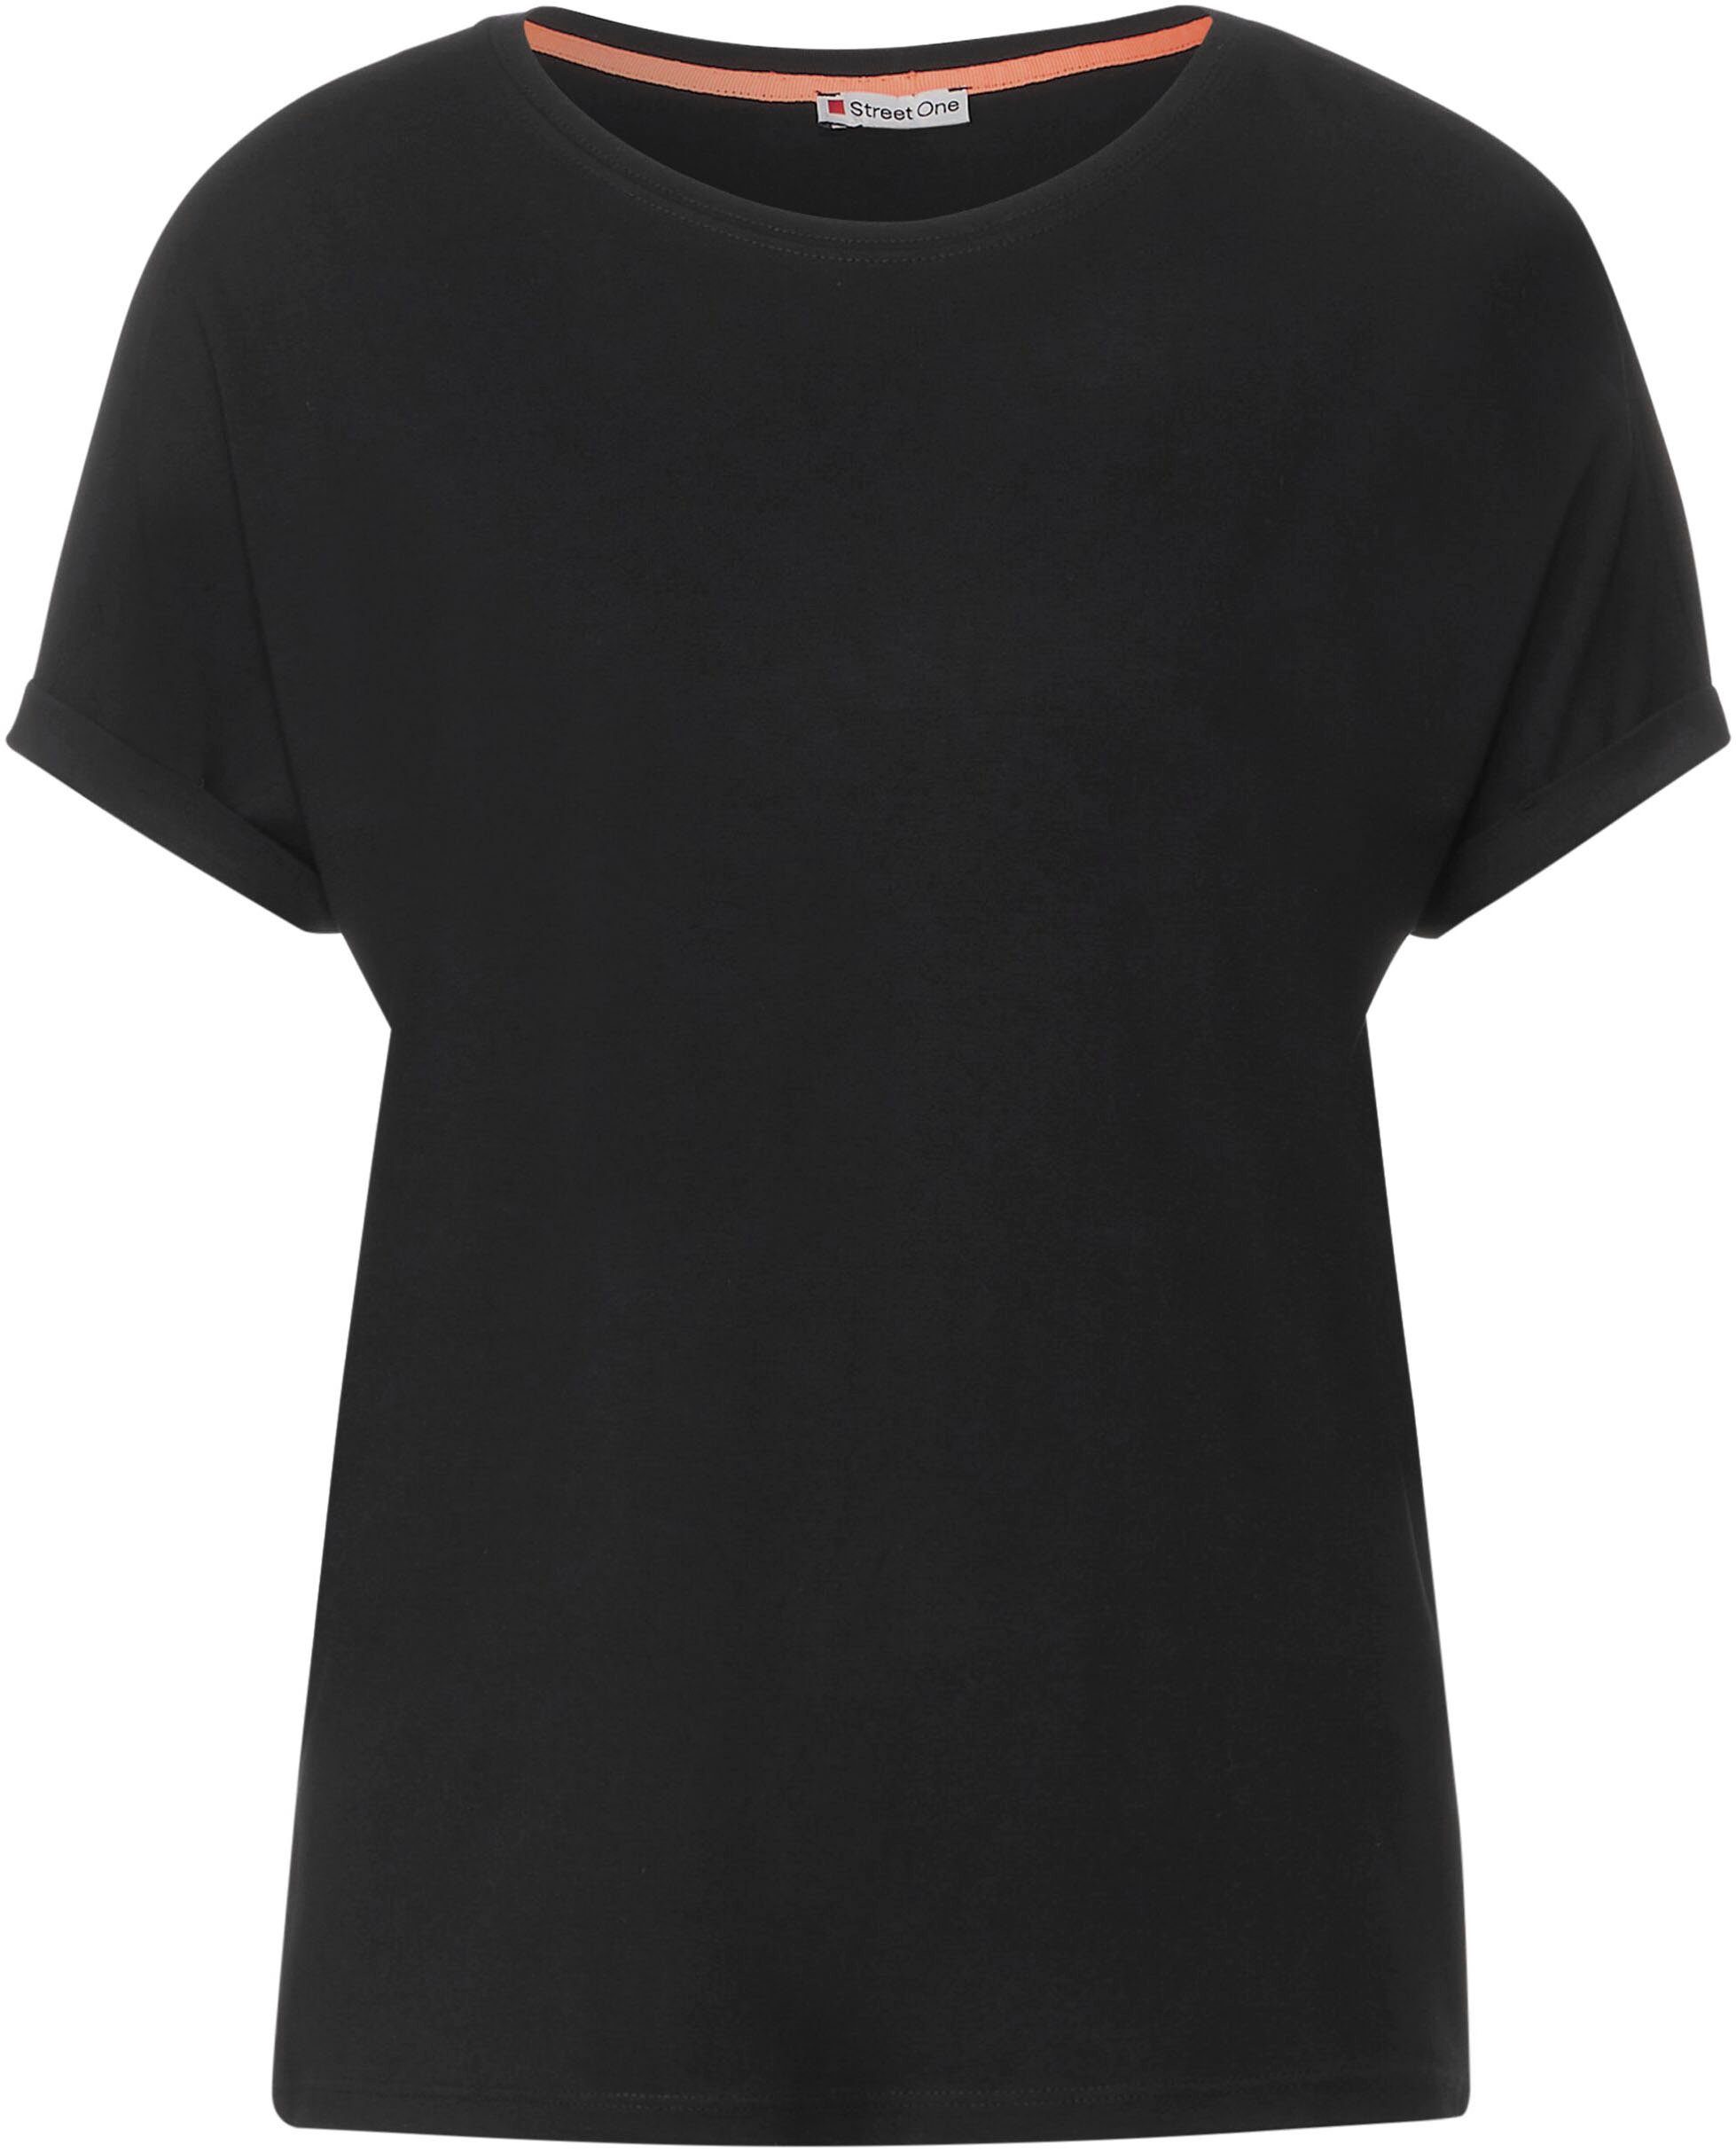 T-Shirt Crista STREET ONE Style Black im